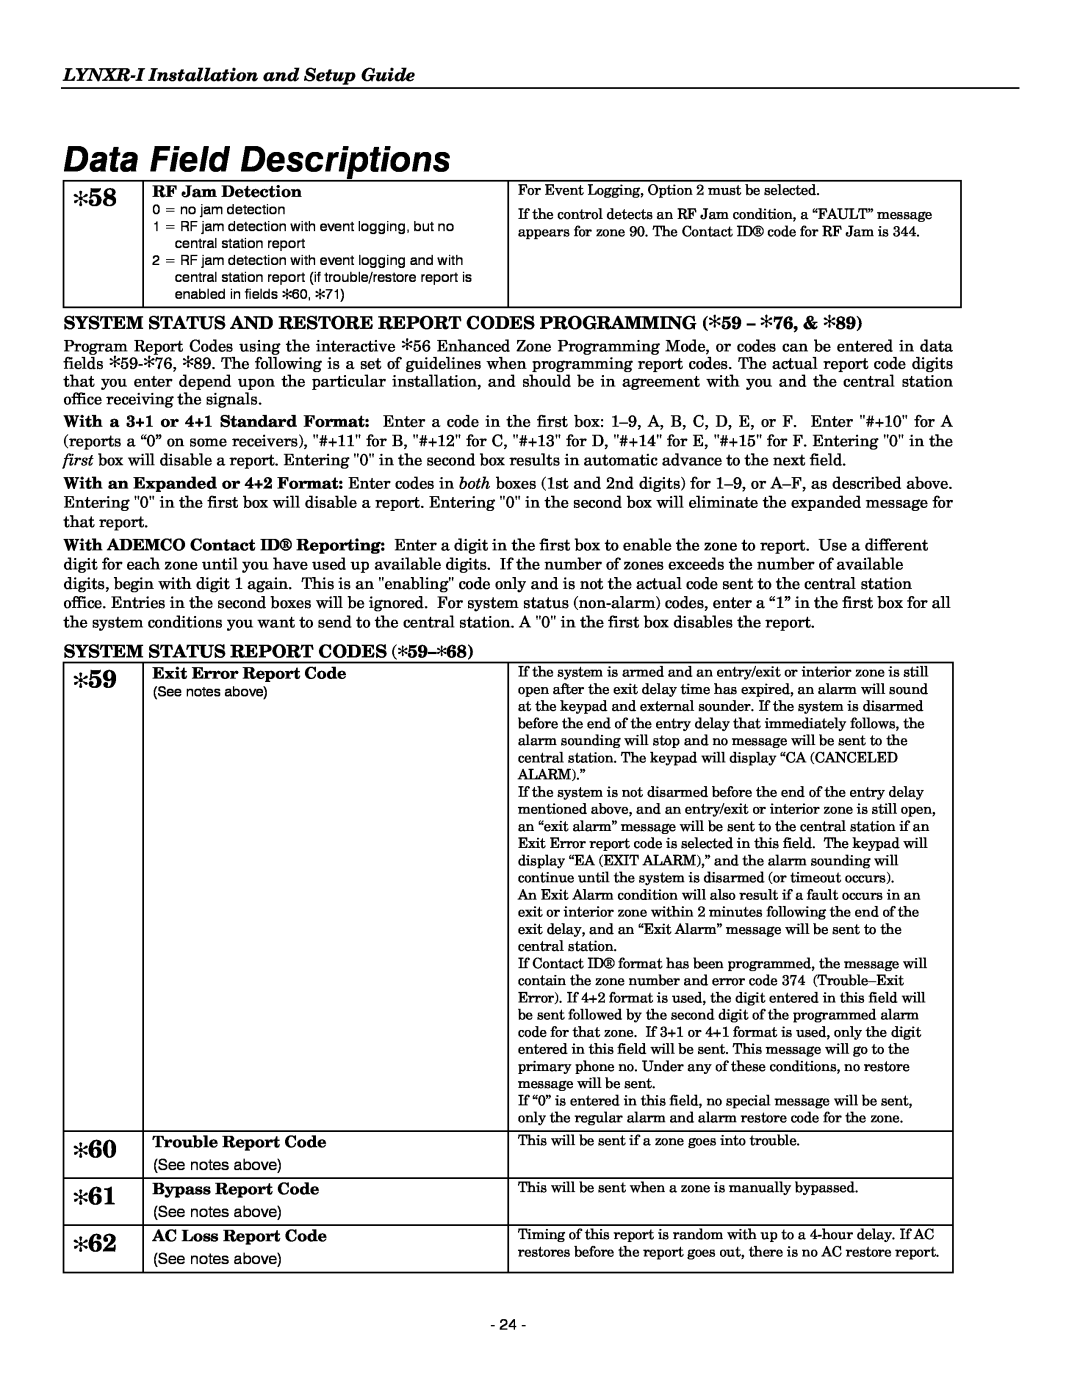 Honeywell K14114 3/06 Rev.B System Status Report Codes, Data Field Descriptions, LYNXR-IInstallation and Setup Guide 